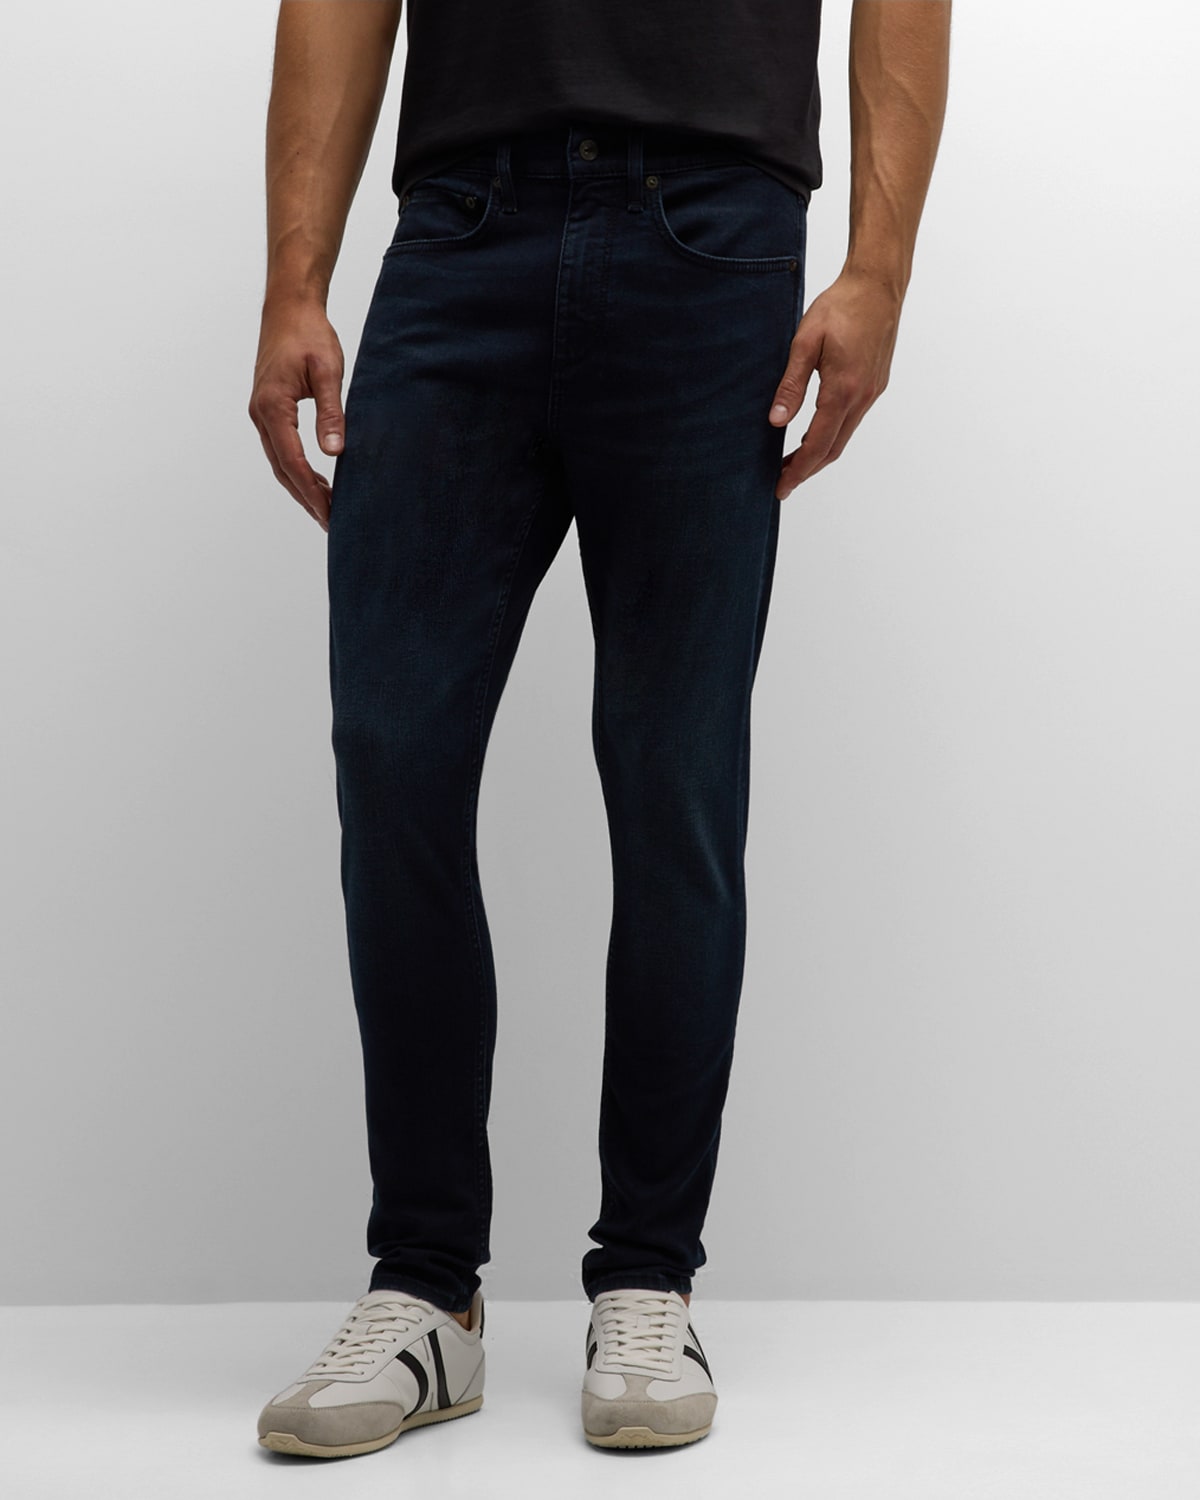 Men's Fit 1 Aero Stretch Denim Skinny Jeans